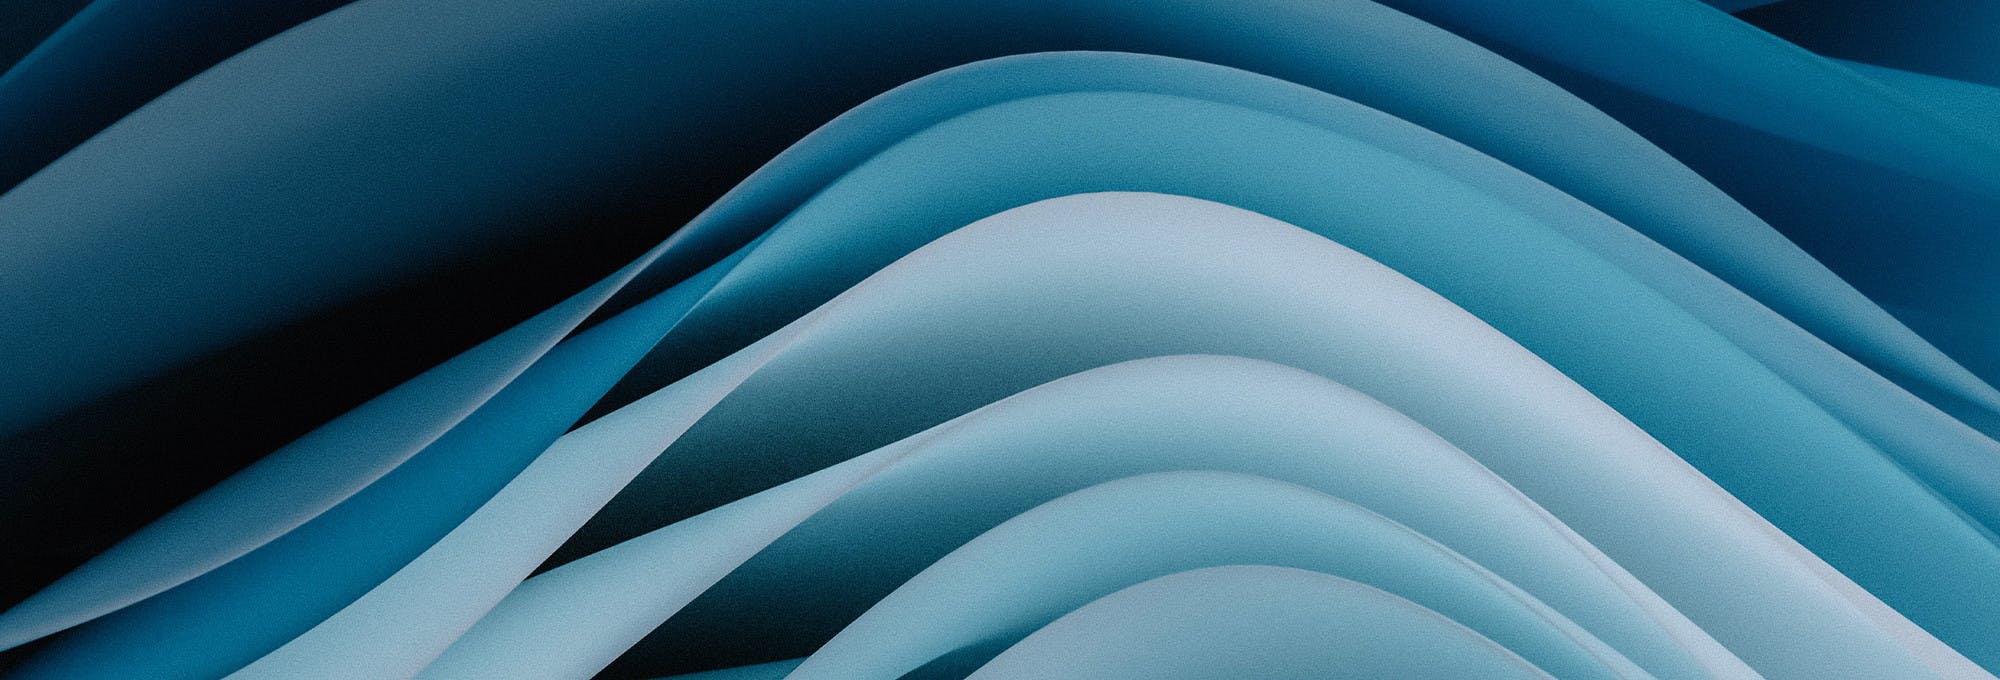 blue paper waves 